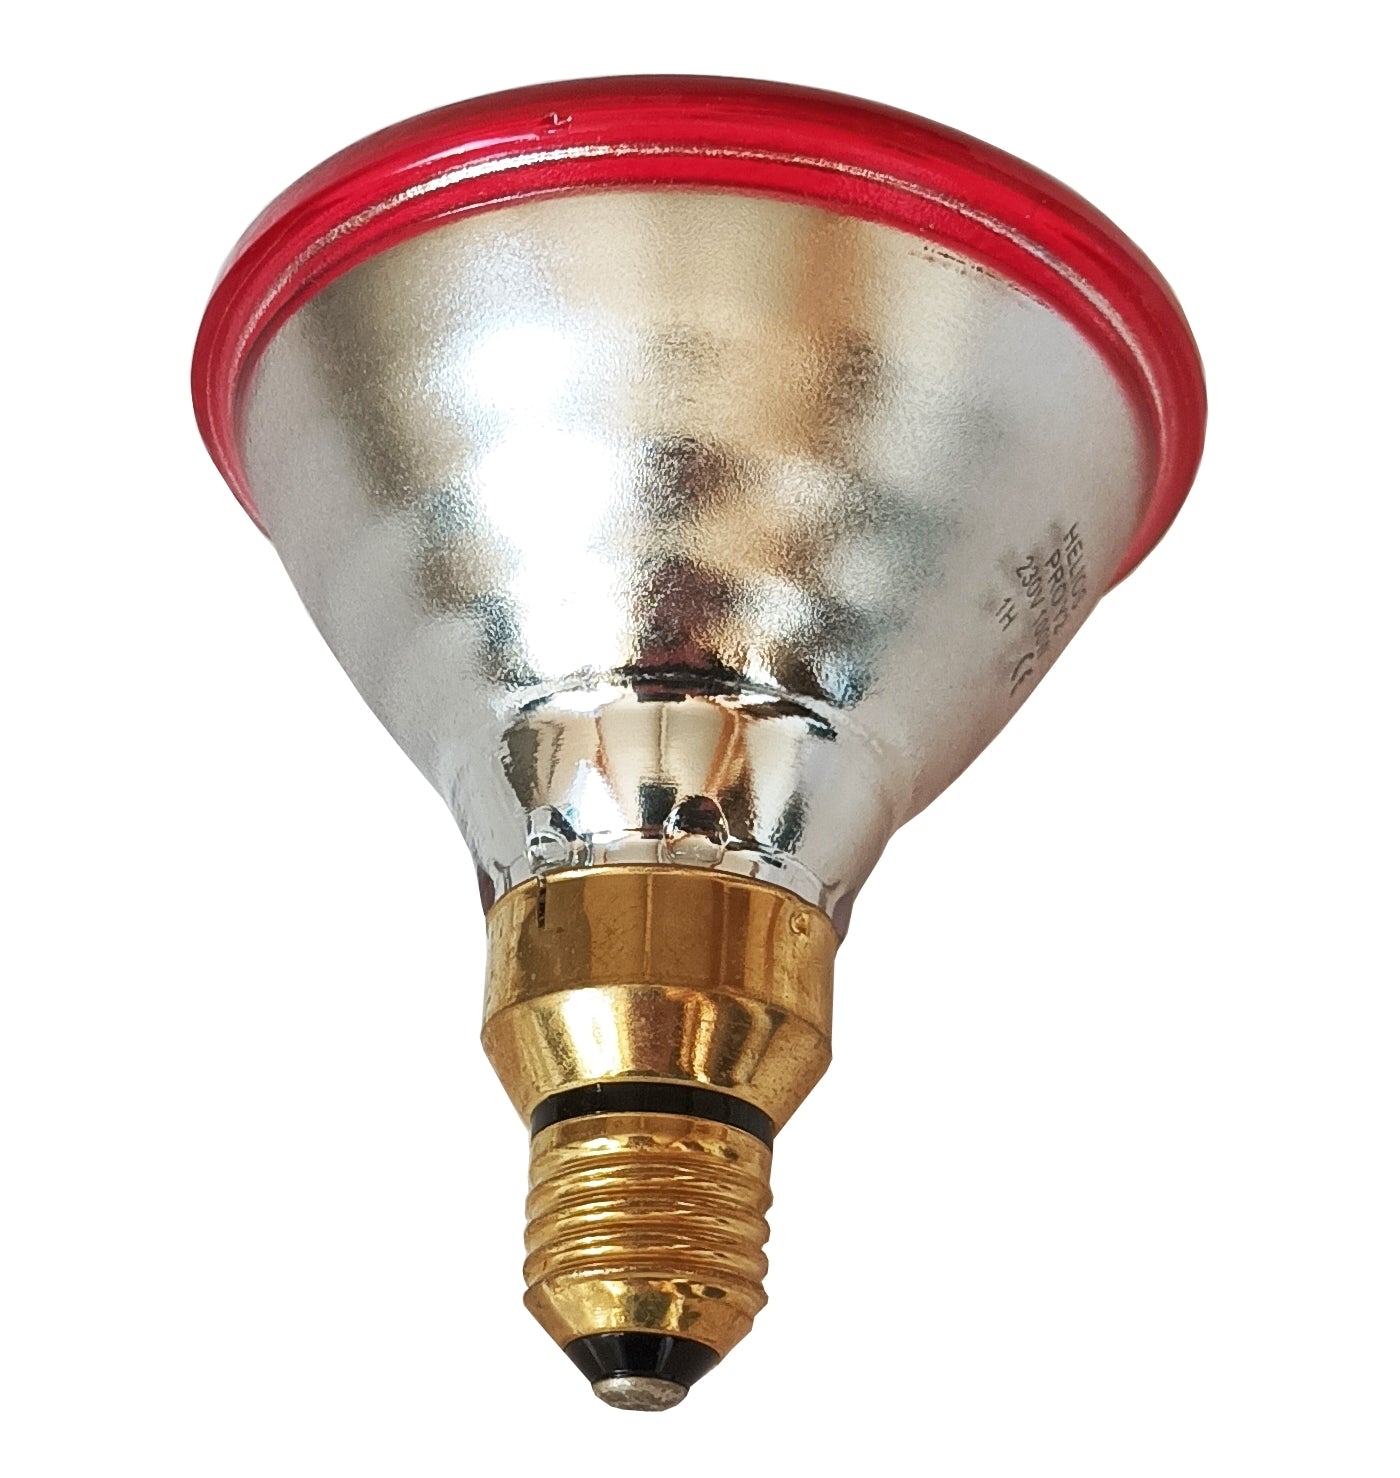 Helios - PAR38 Infra-Red Heat Bulb (Red) 175 Watt - Buy Online SPR Centre UK